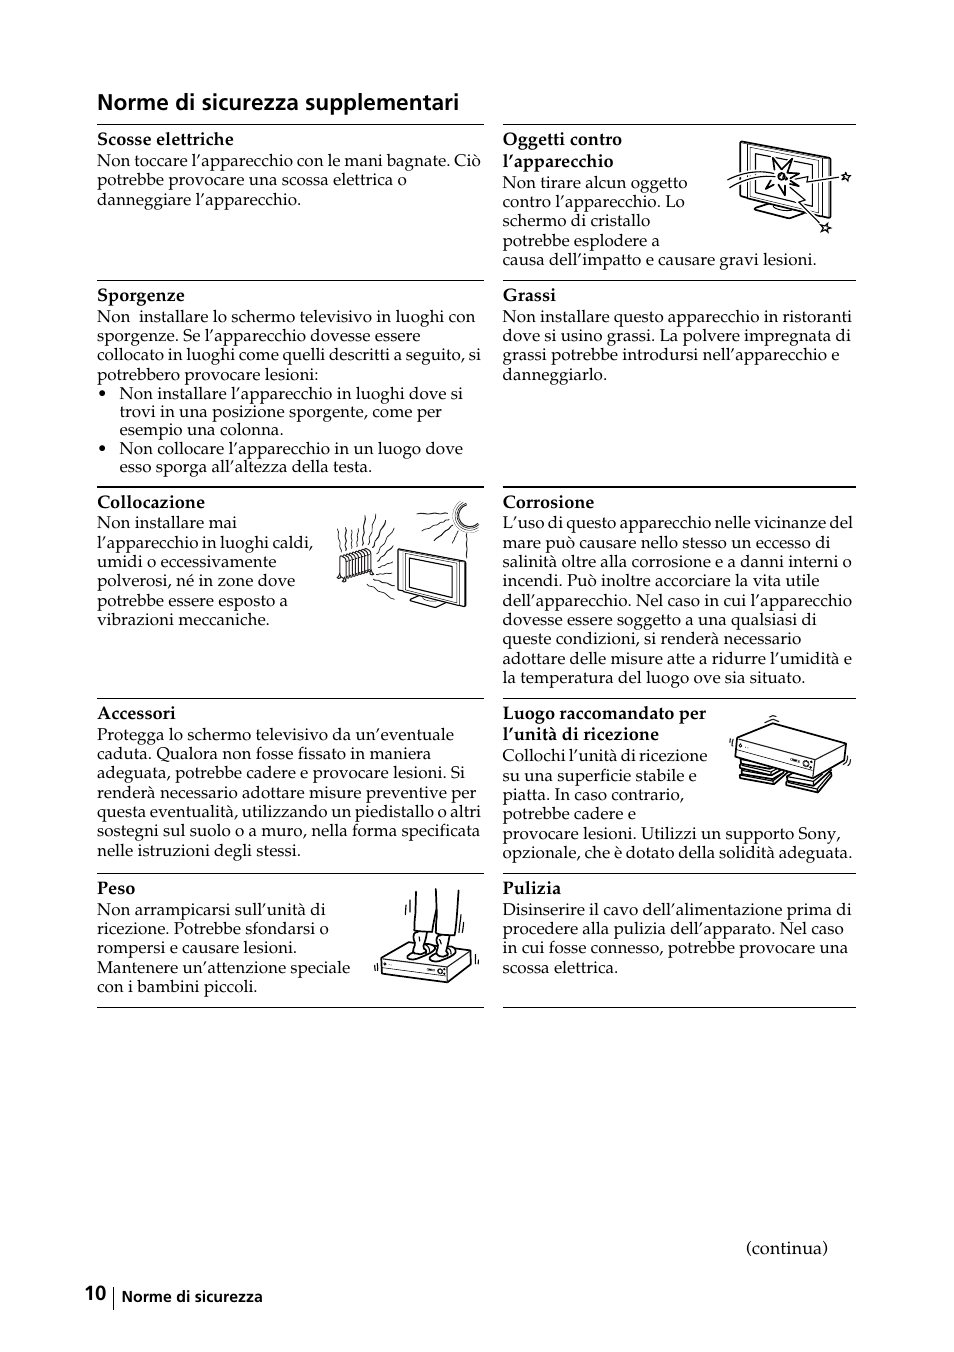 Norme di sicurezza supplementari | Sony KE-42MR1 Manuale d'uso | Pagina 11 / 302